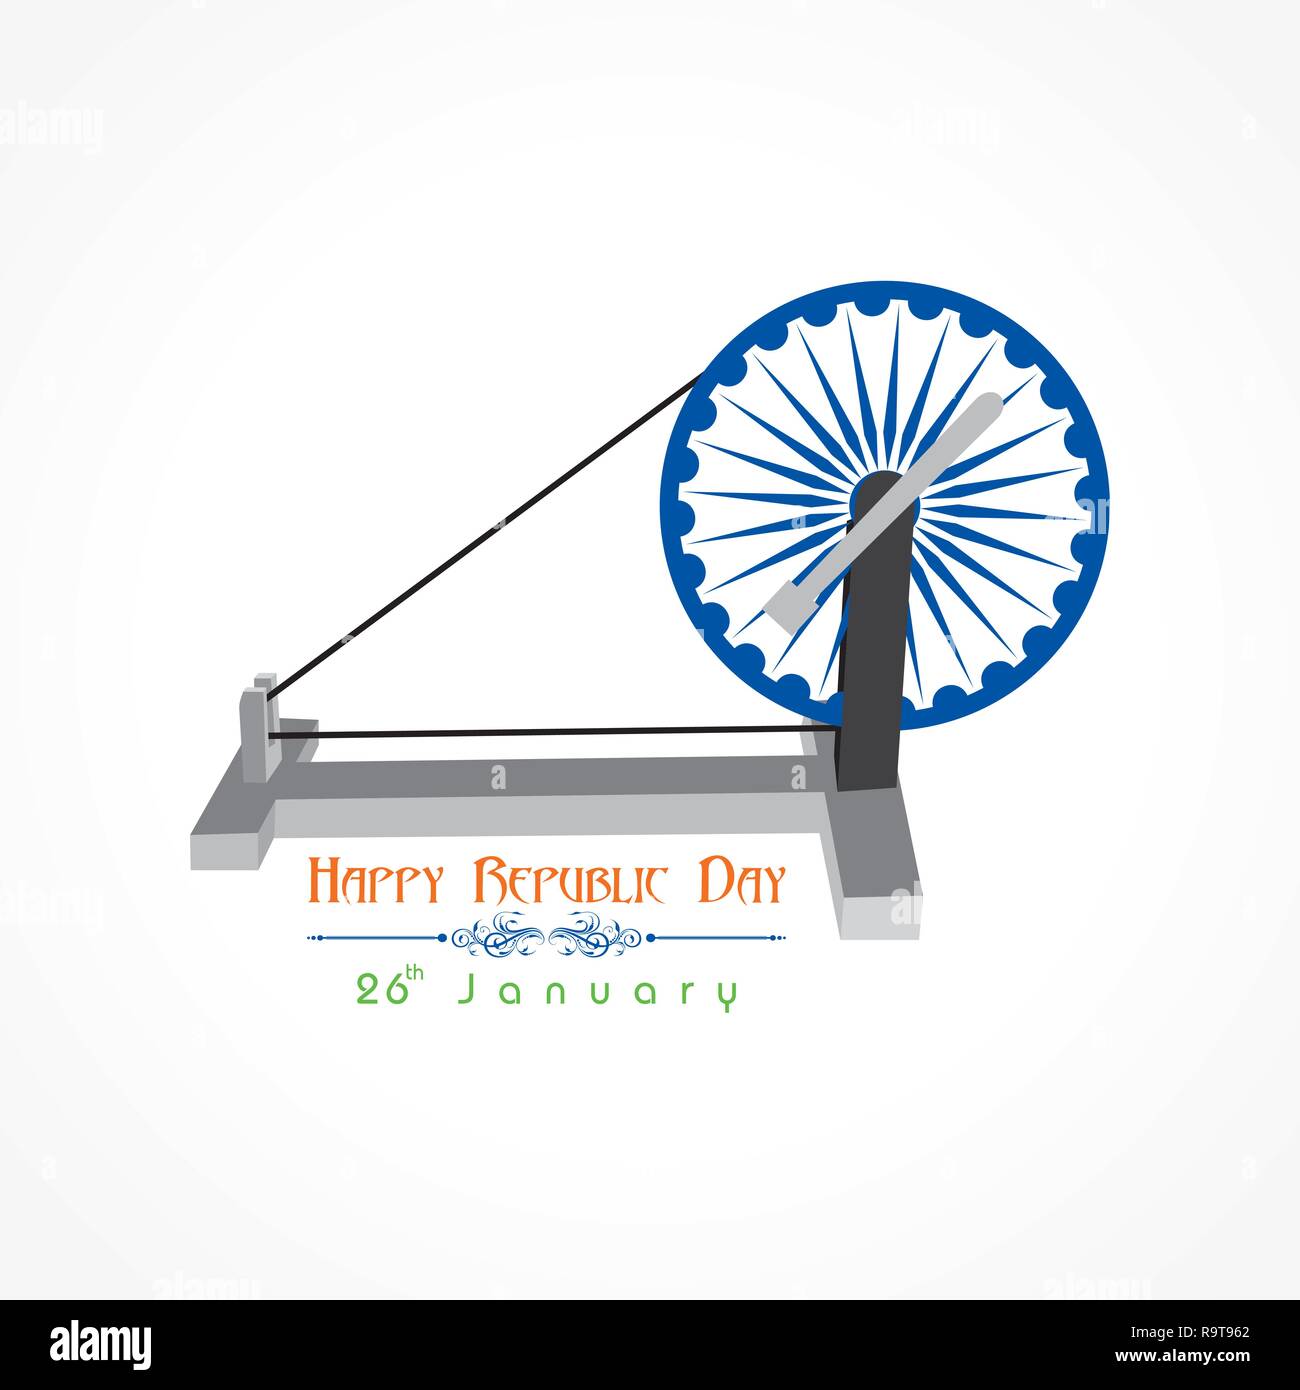 Happy Republic Day of india illustration vector, poster design stock vector Stock Vector